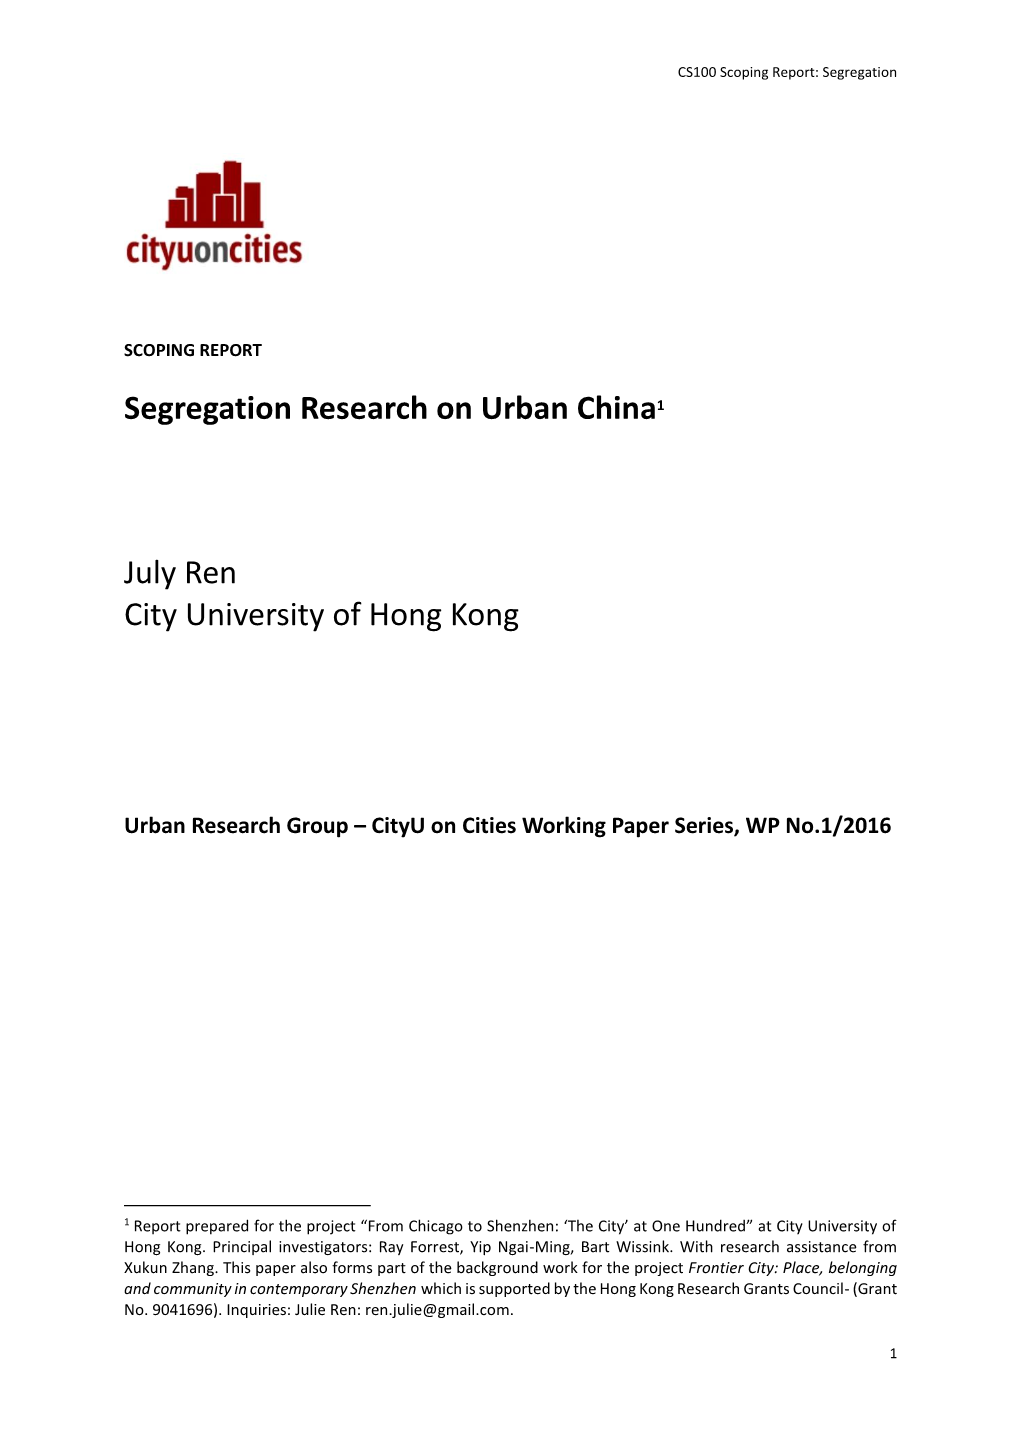 Segregation Research on Urban China1 July Ren City University of Hong Kong